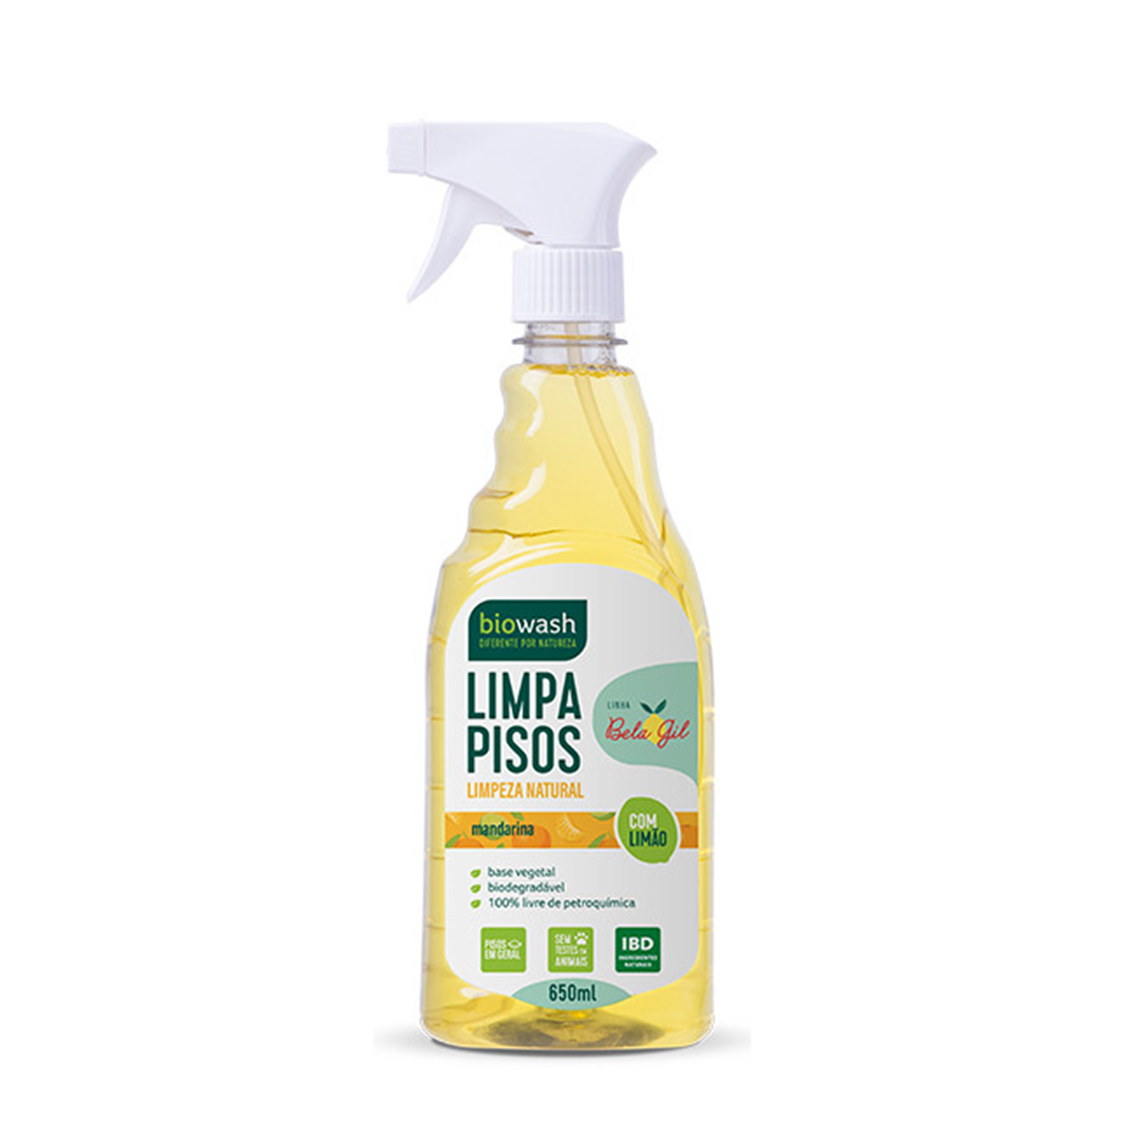 Limpa Pisos (650ml) – Biowash